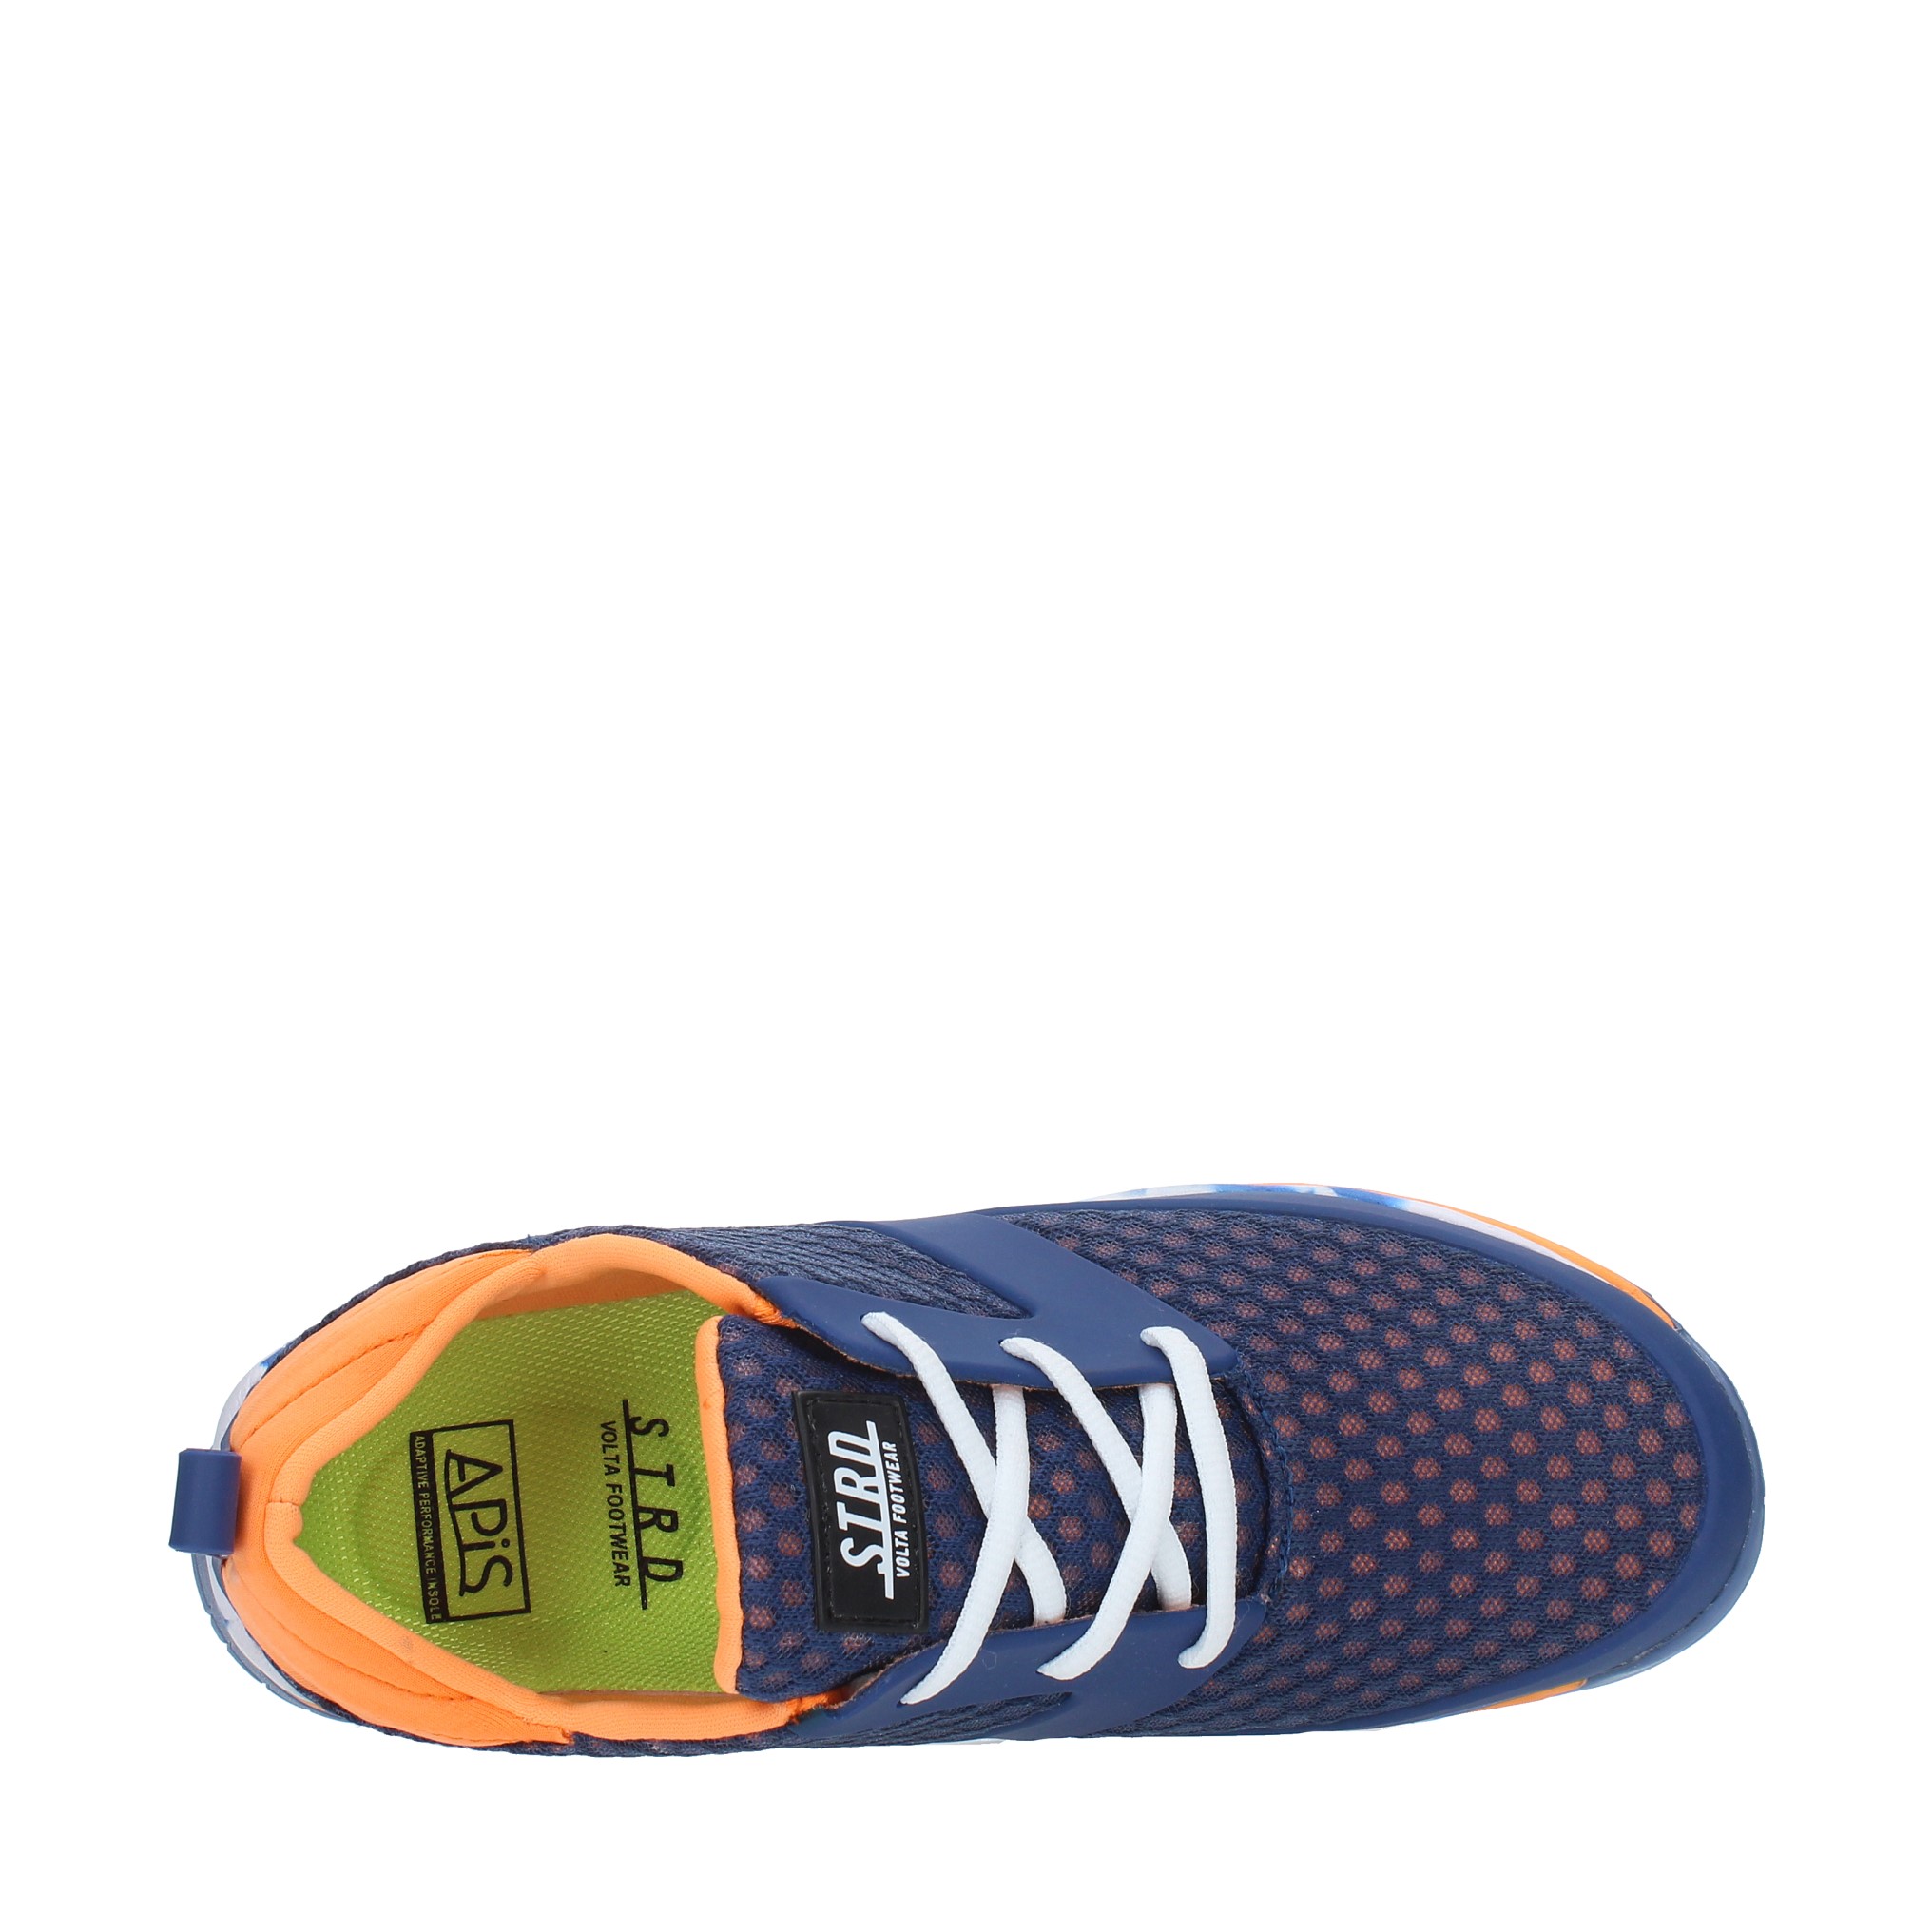 Trainers Blue - STRD BY VOLTA FOOTWEAR - Ginevra calzature